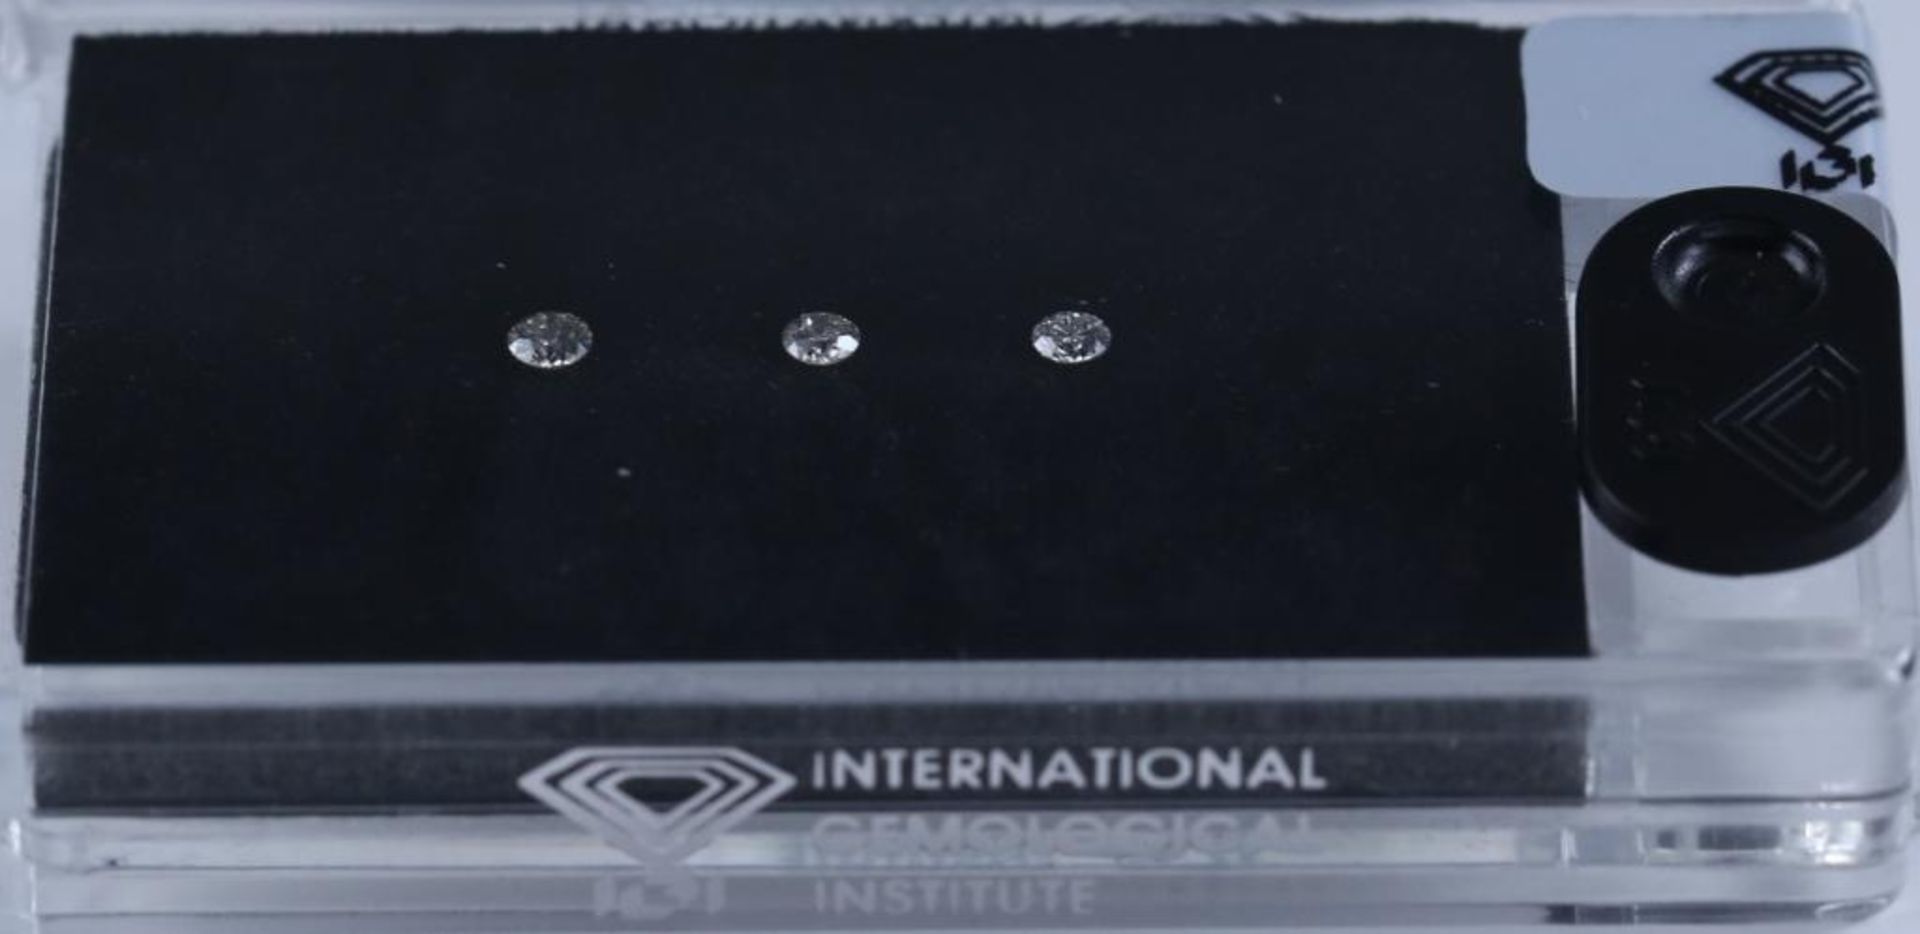 IGI Sealed 0.25 ct. Diamond "D-Box" - K-L UNTREATED - Image 3 of 3